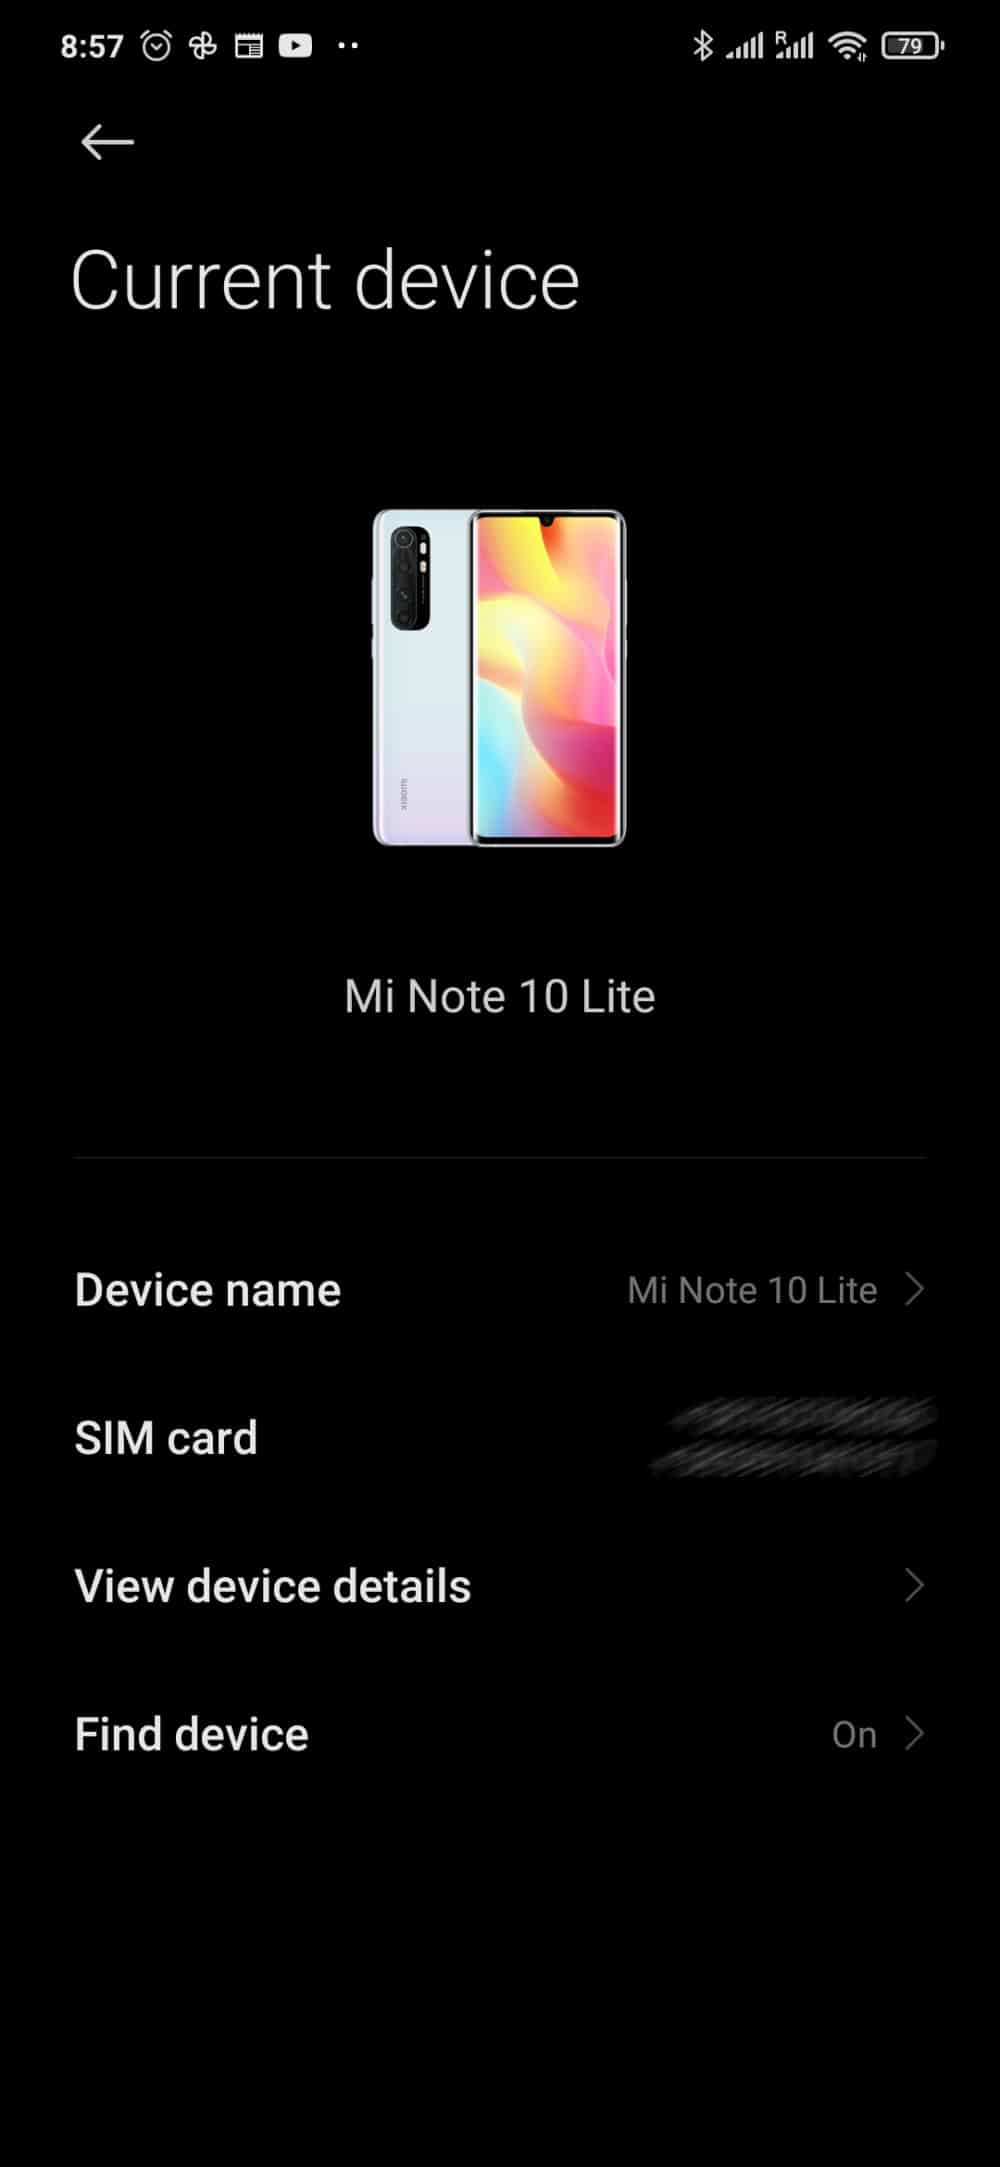 Xiaomi Find Device opcija za pronalazak mobitela